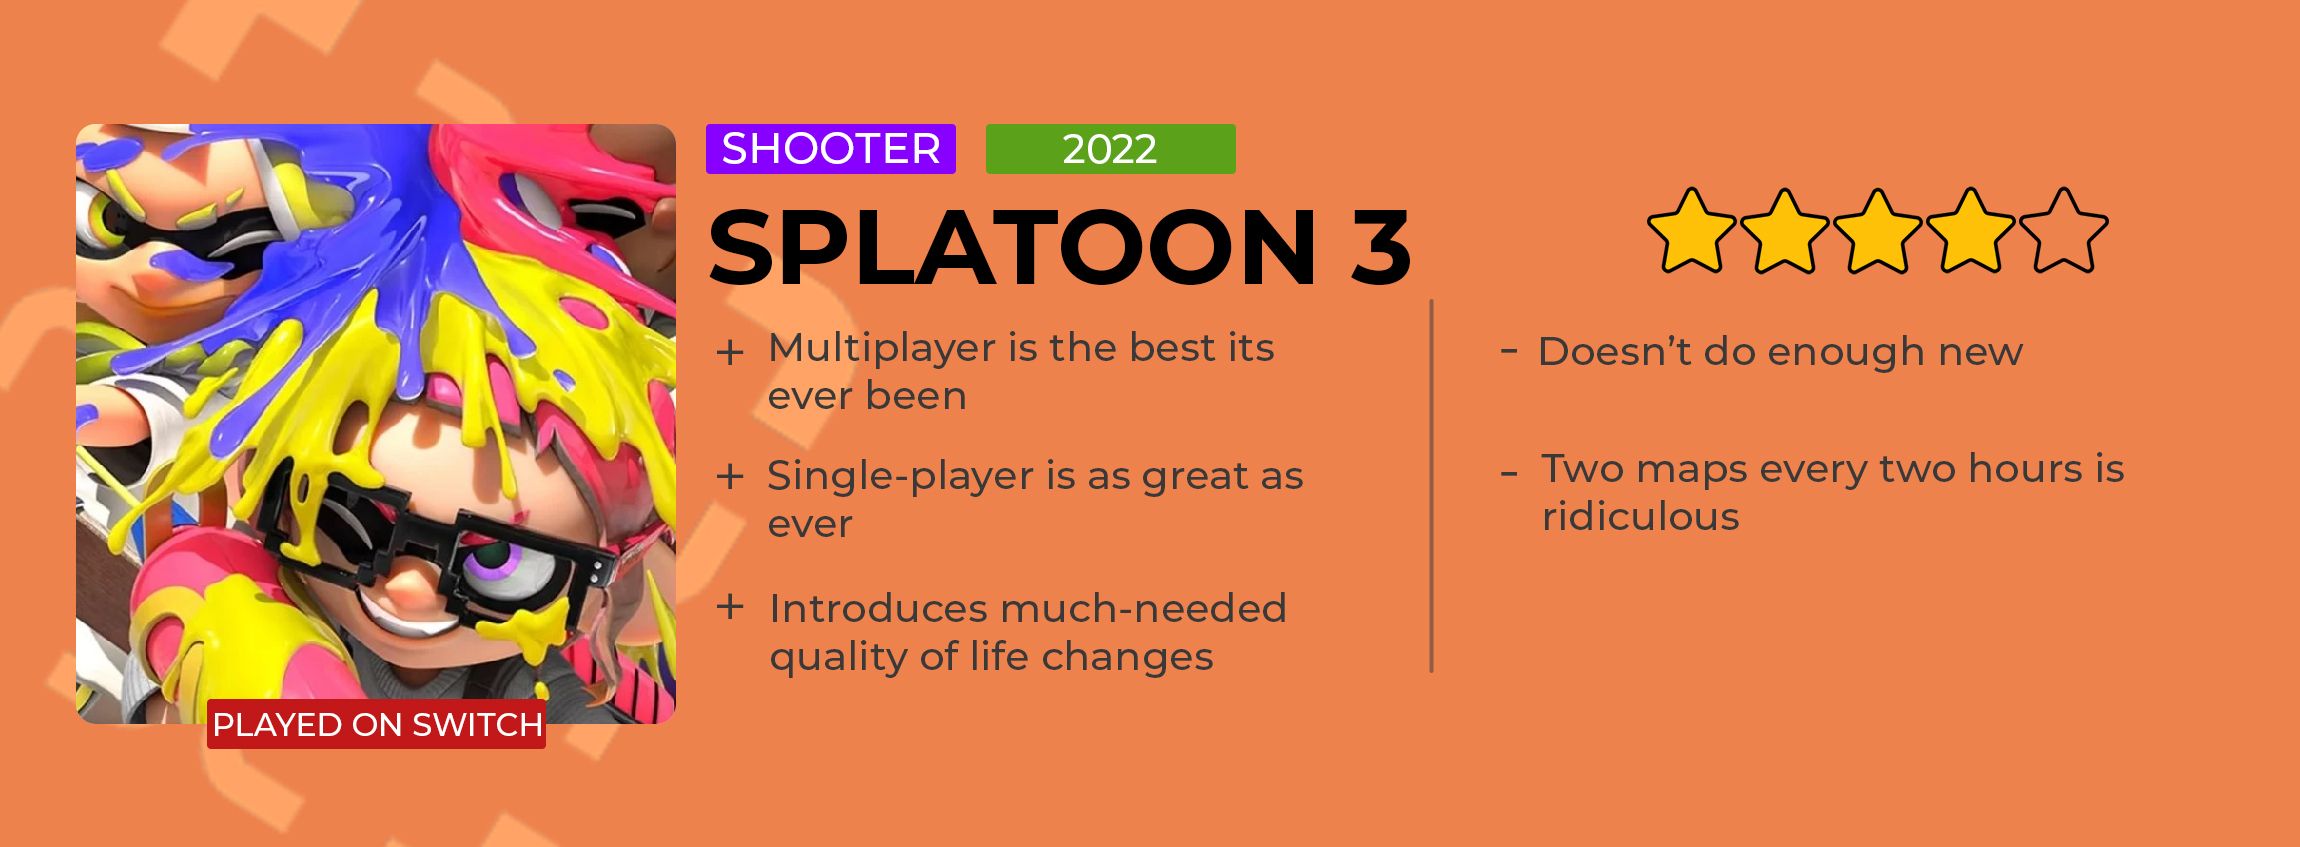 Splatoon 3 Review Card